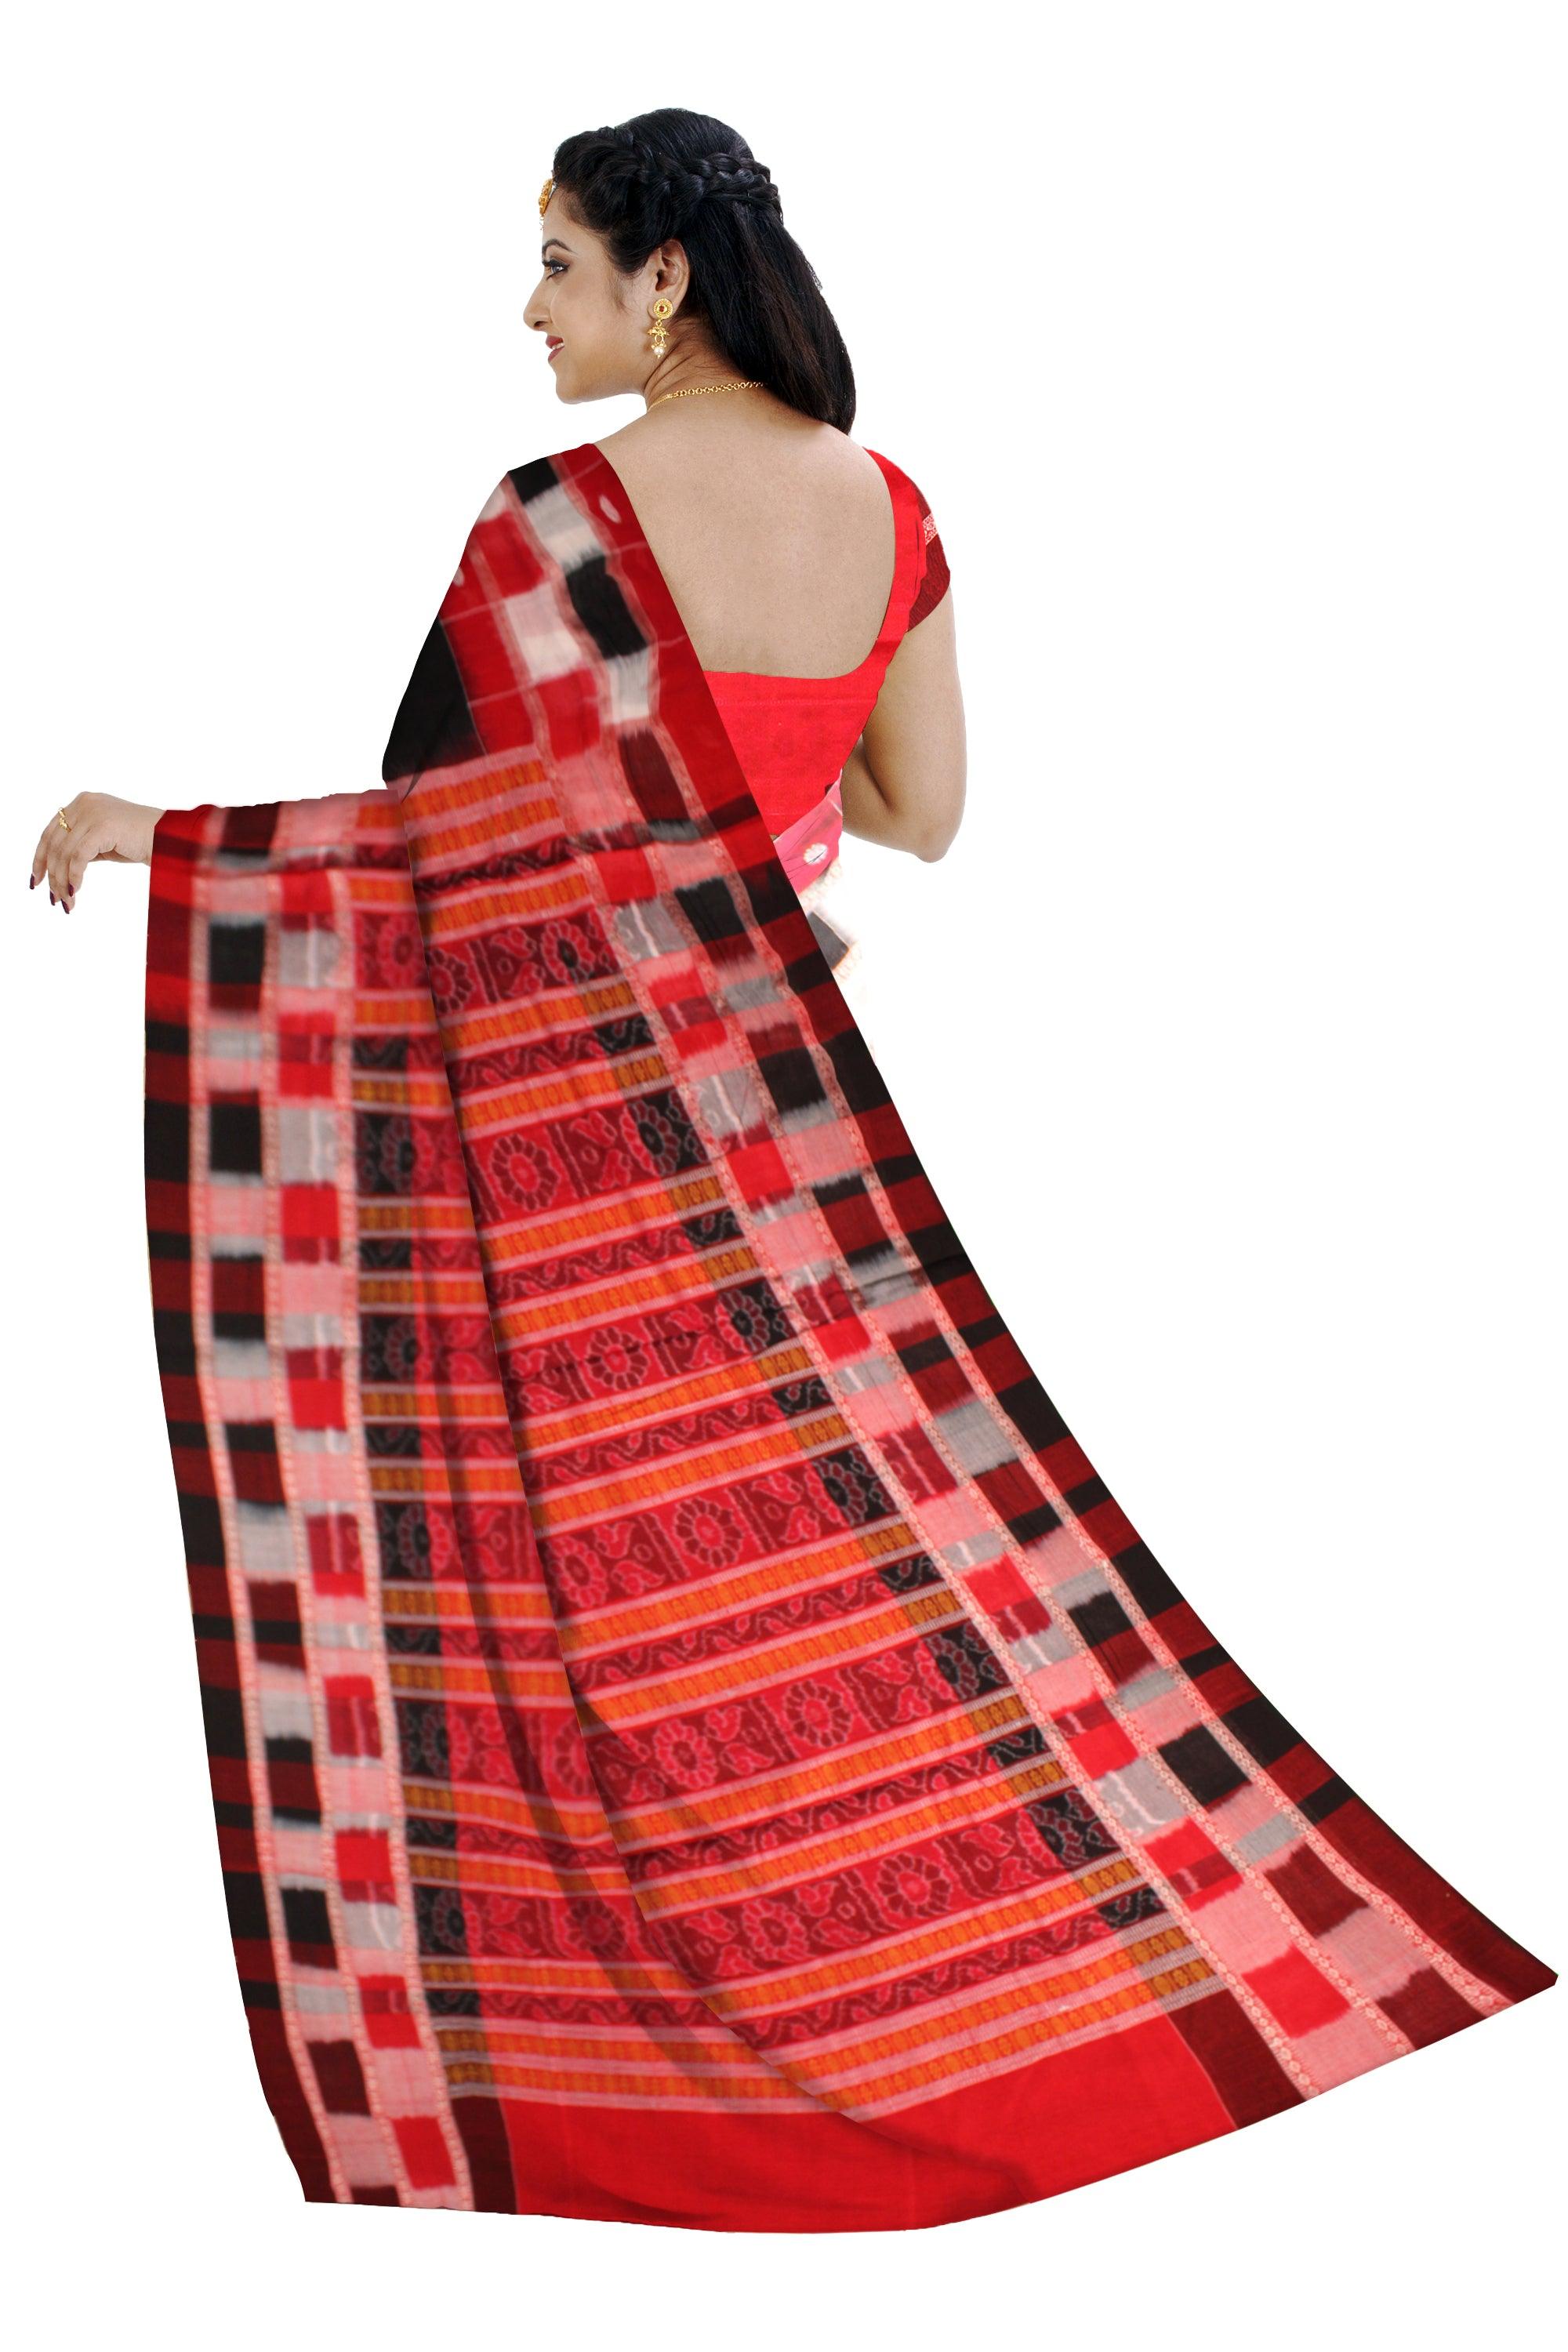 Sambalpuri Saree in Black color body and Red and White Pasapali Border with blouse piece. - Koshali Arts & Crafts Enterprise